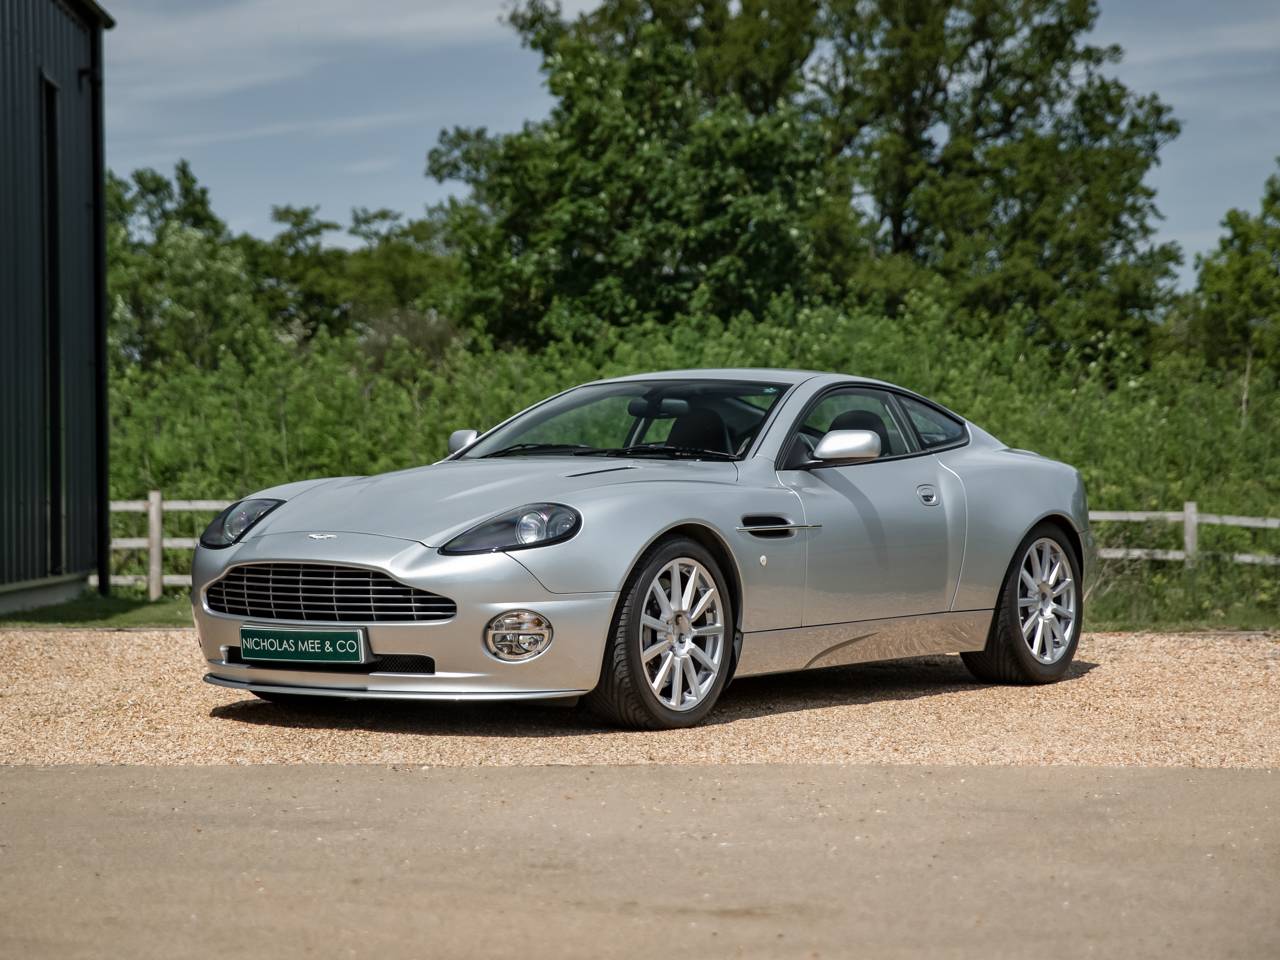 For Sale: Aston Martin V12 Vanquish S (2005) offered for £138,072